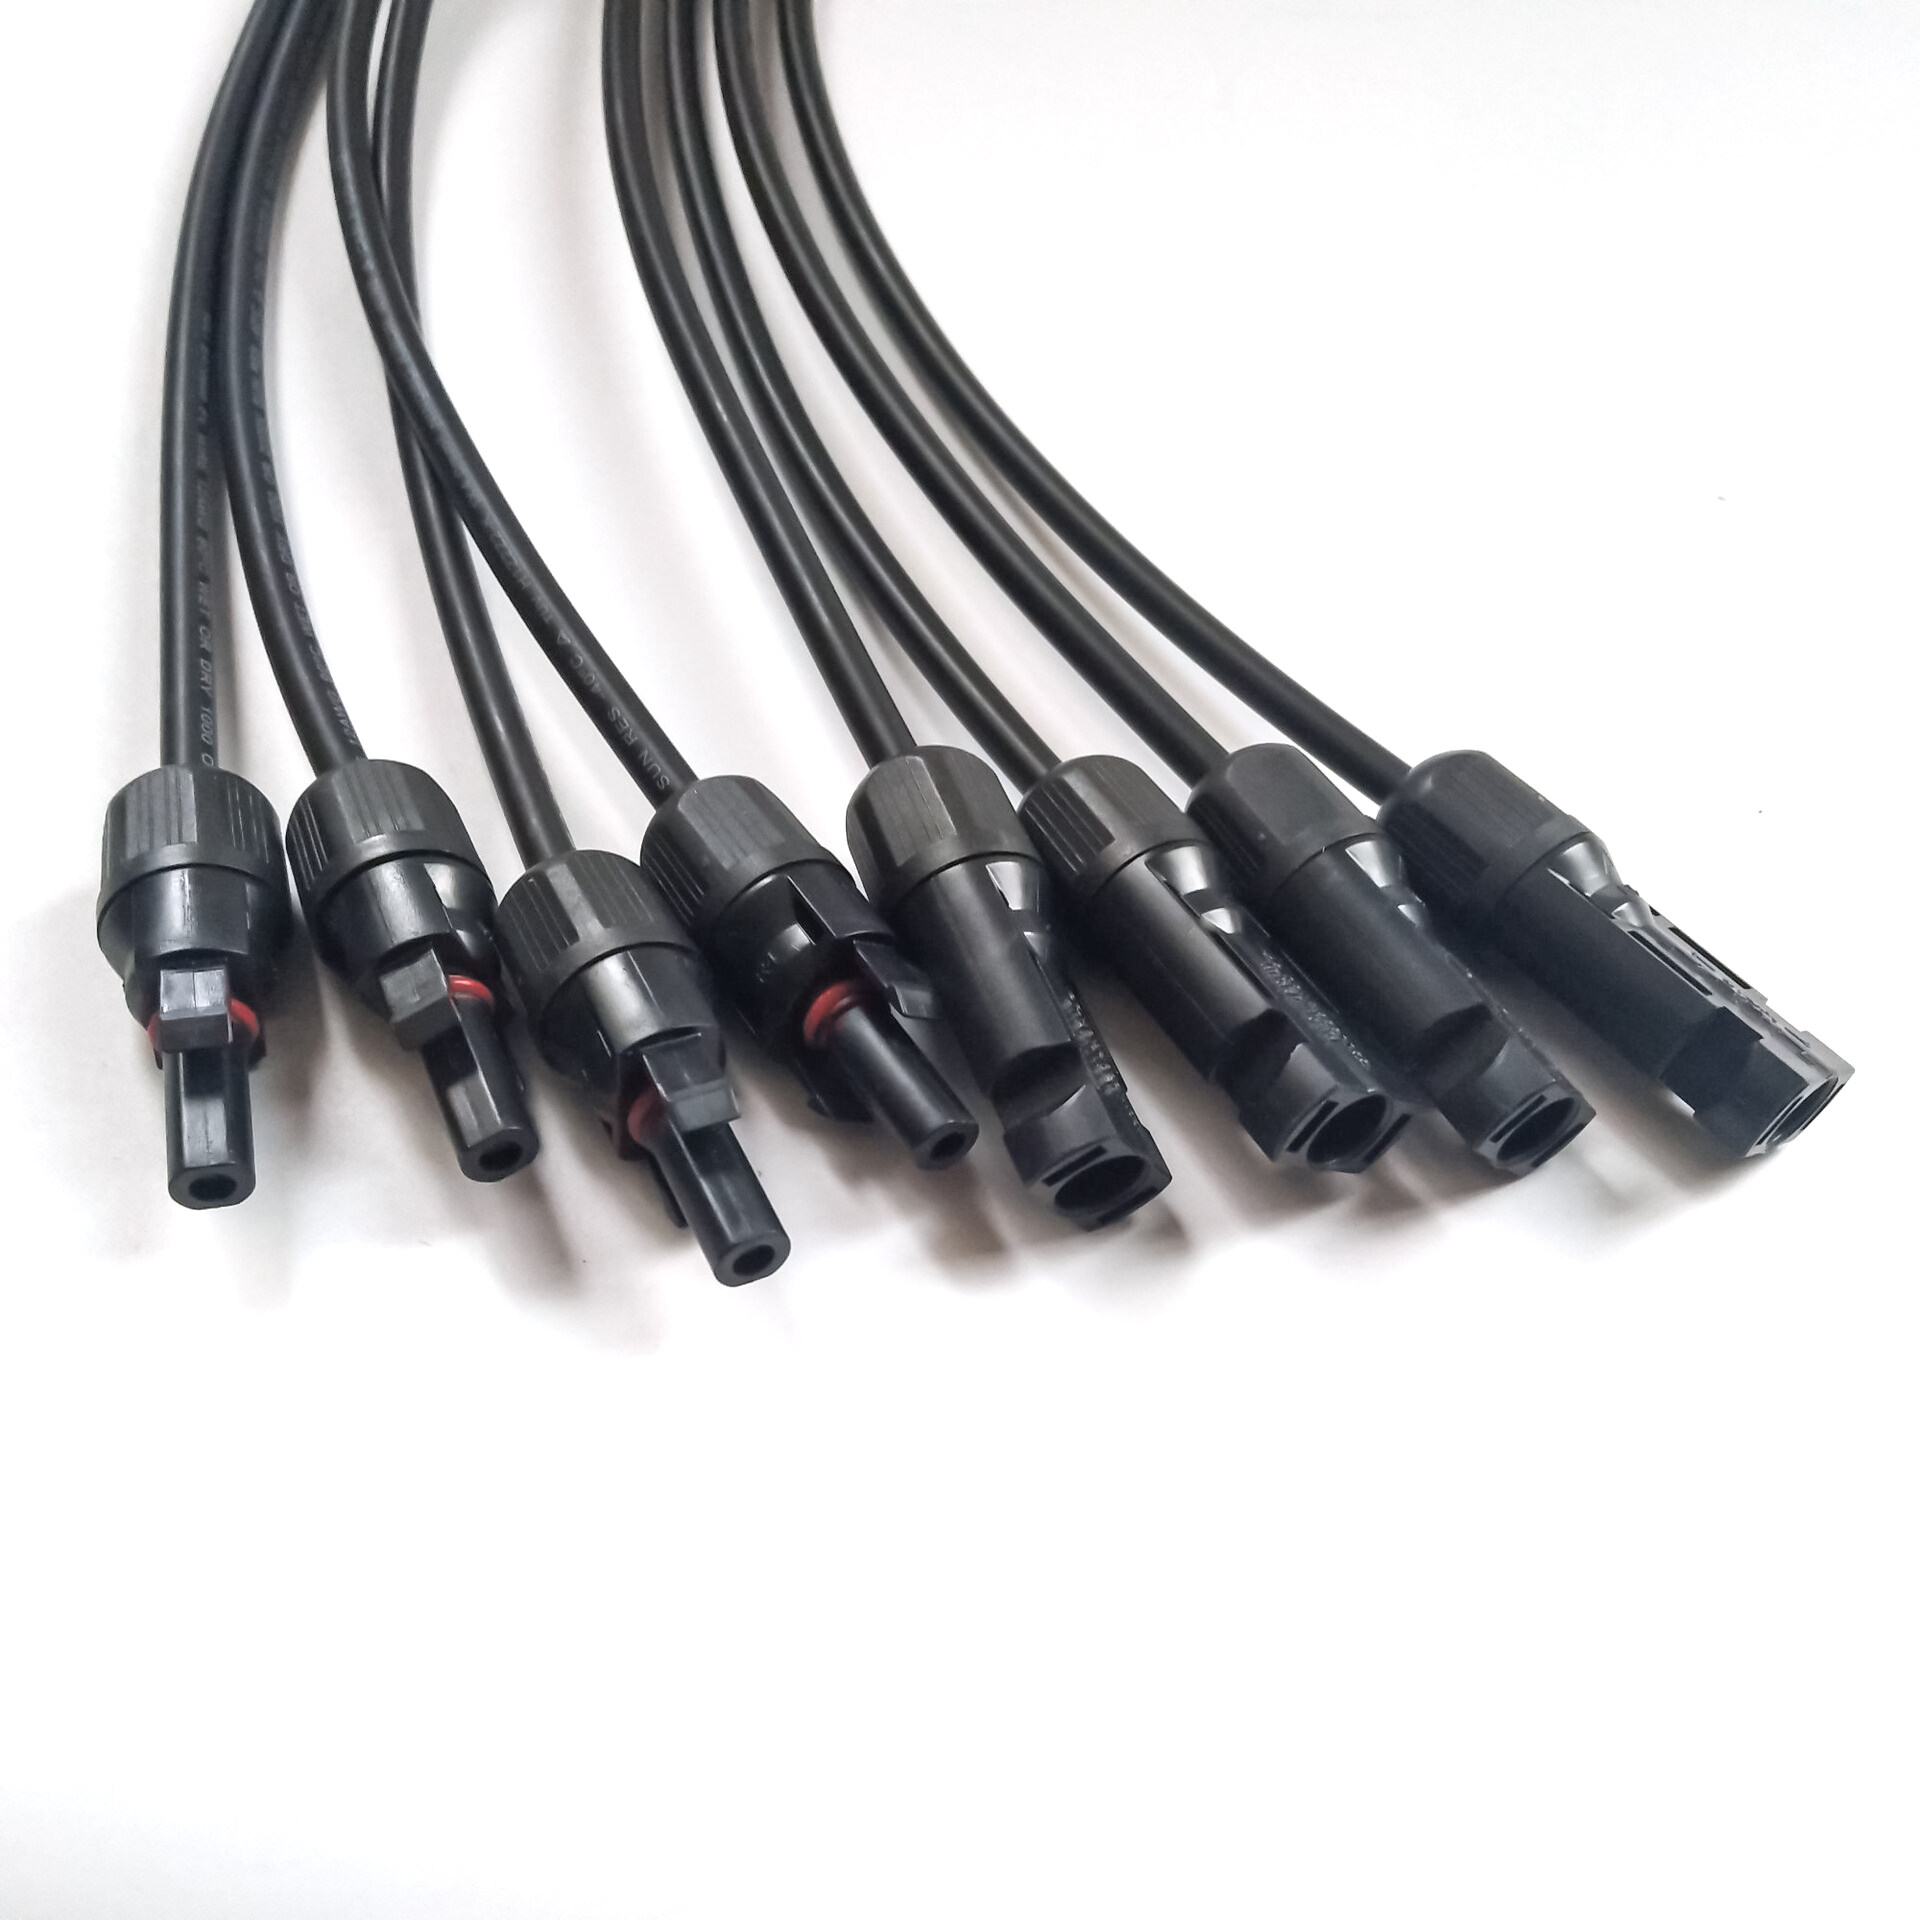 bulk cable connectors, custom cable connectors, wholesale cables and connectors, cable connector ip68